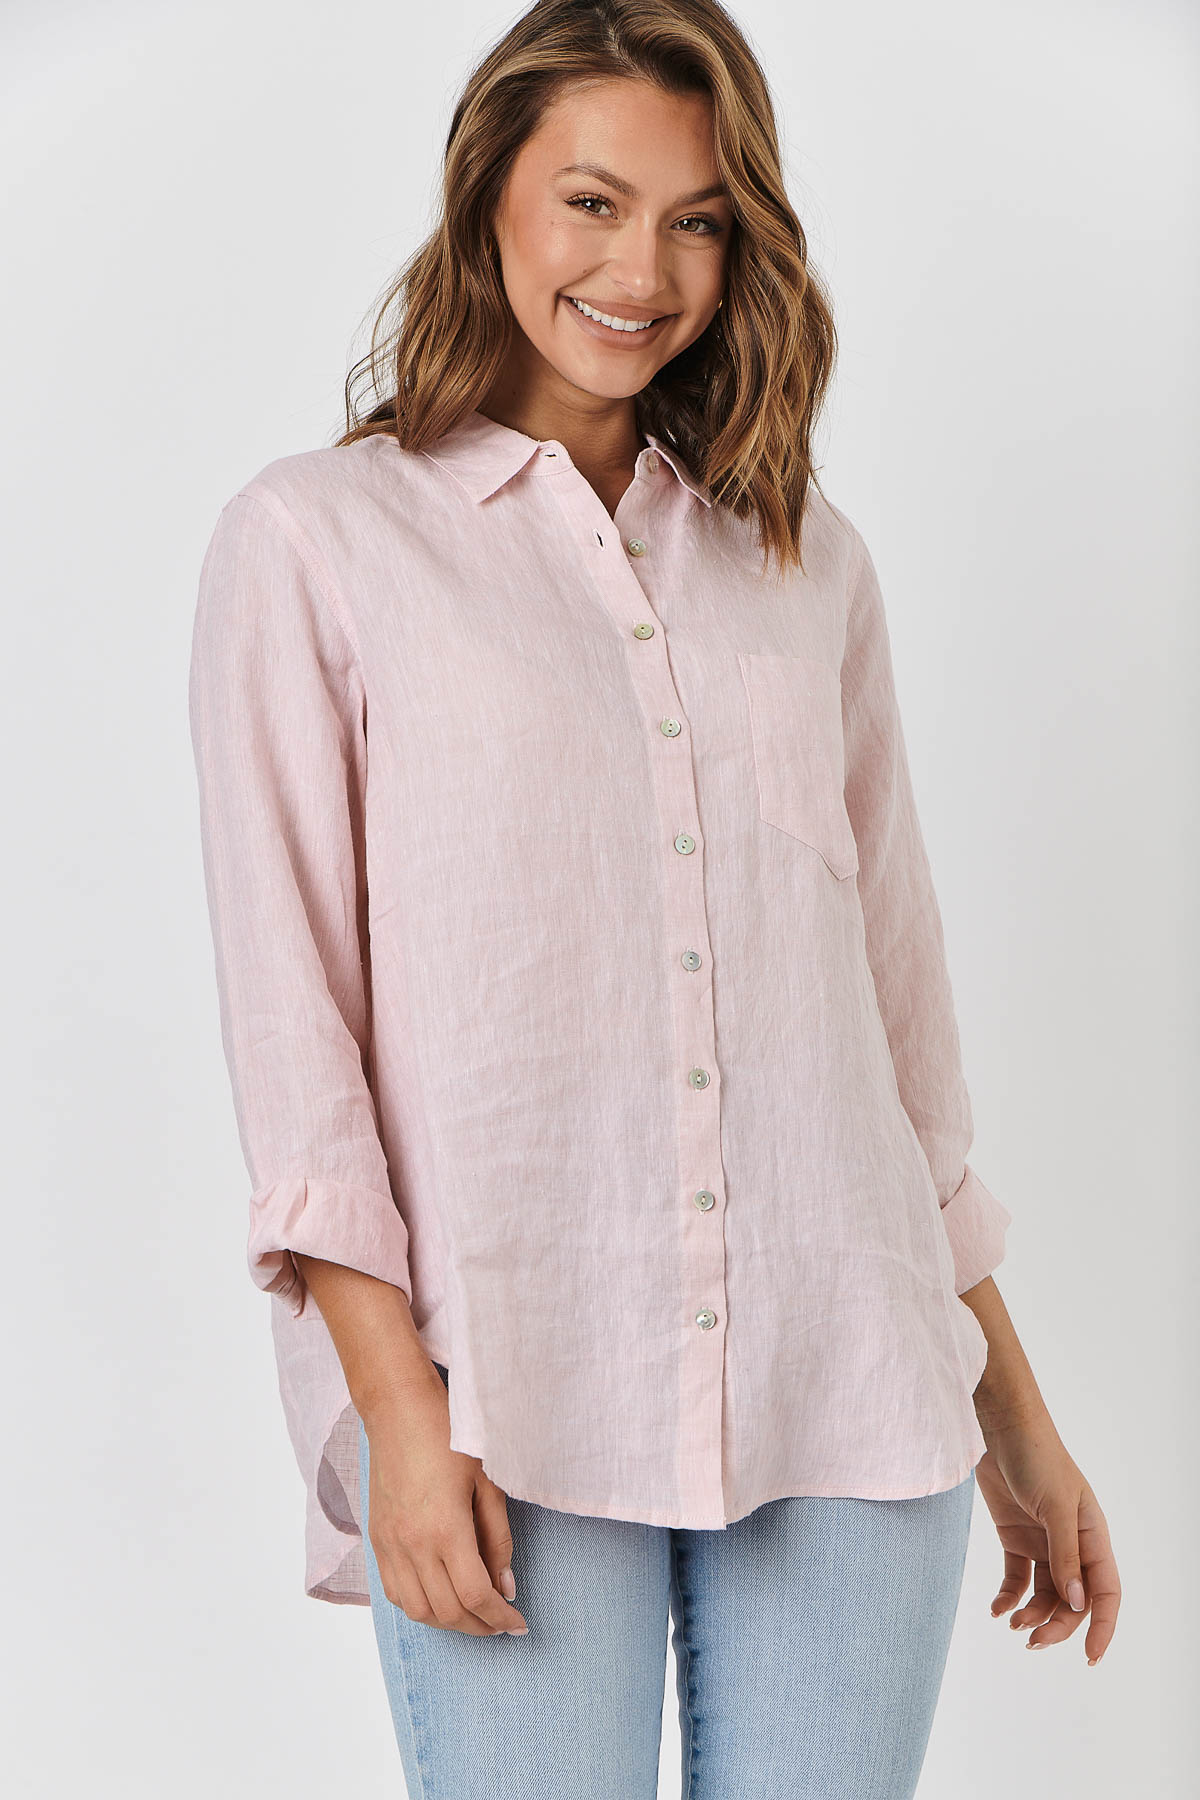 Sally Linen Shirt In Pink - Fresca Fashion